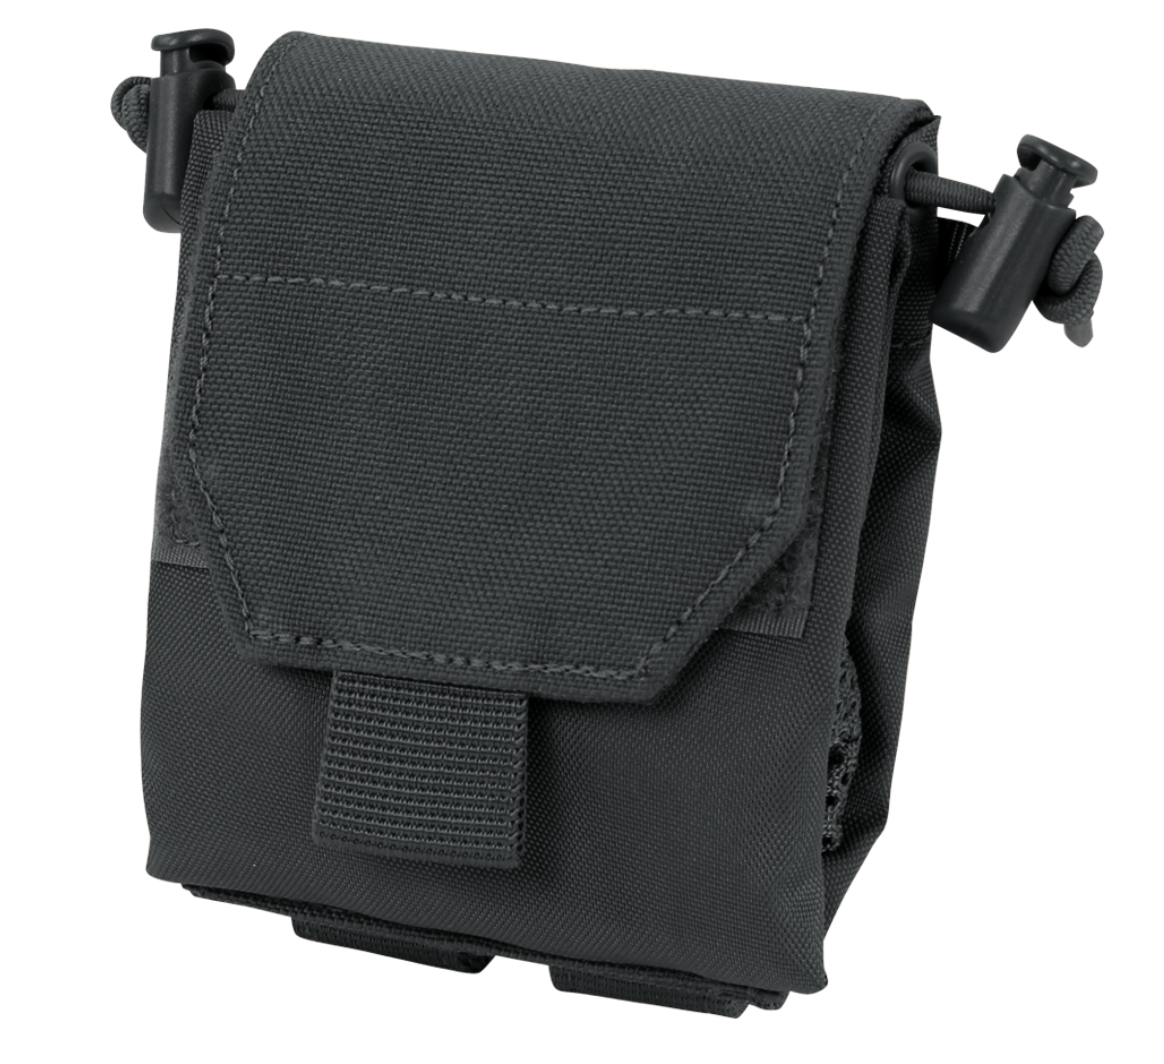 Condor Micro Dump Pouch Black Accessories Condor Outdoor Tactical Gear Supplier Tactical Distributors Australia